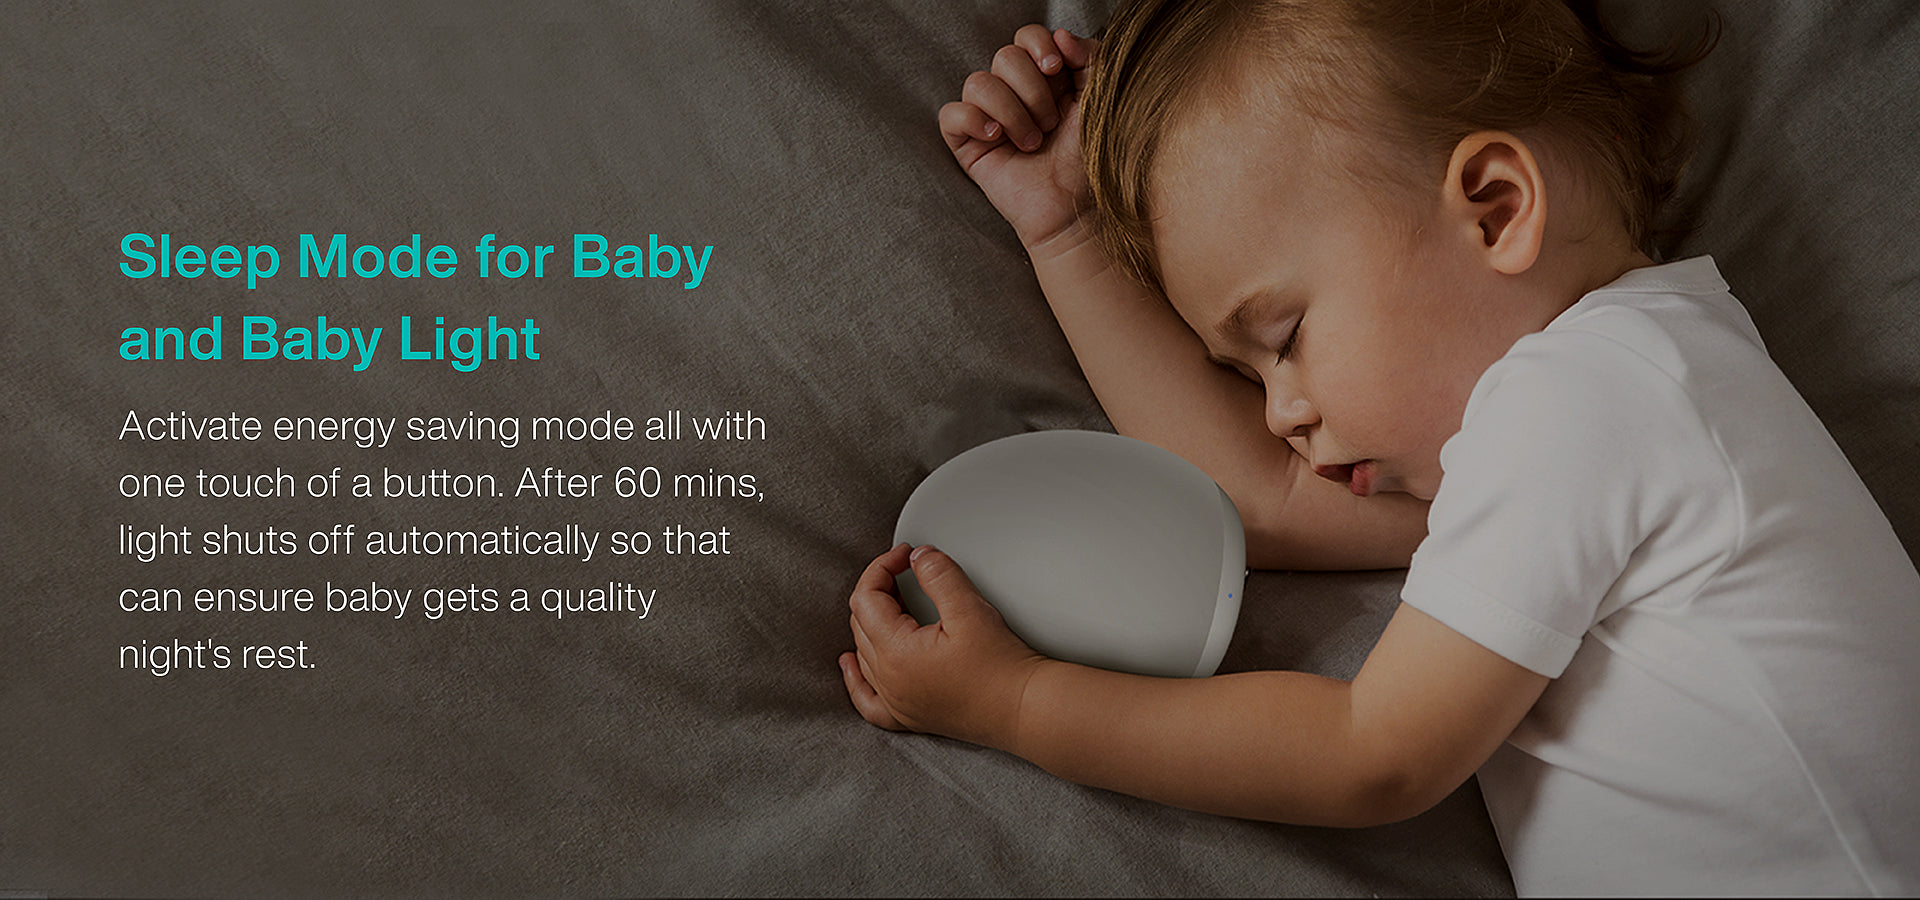 Sleep Mode for Baby and Baby Light